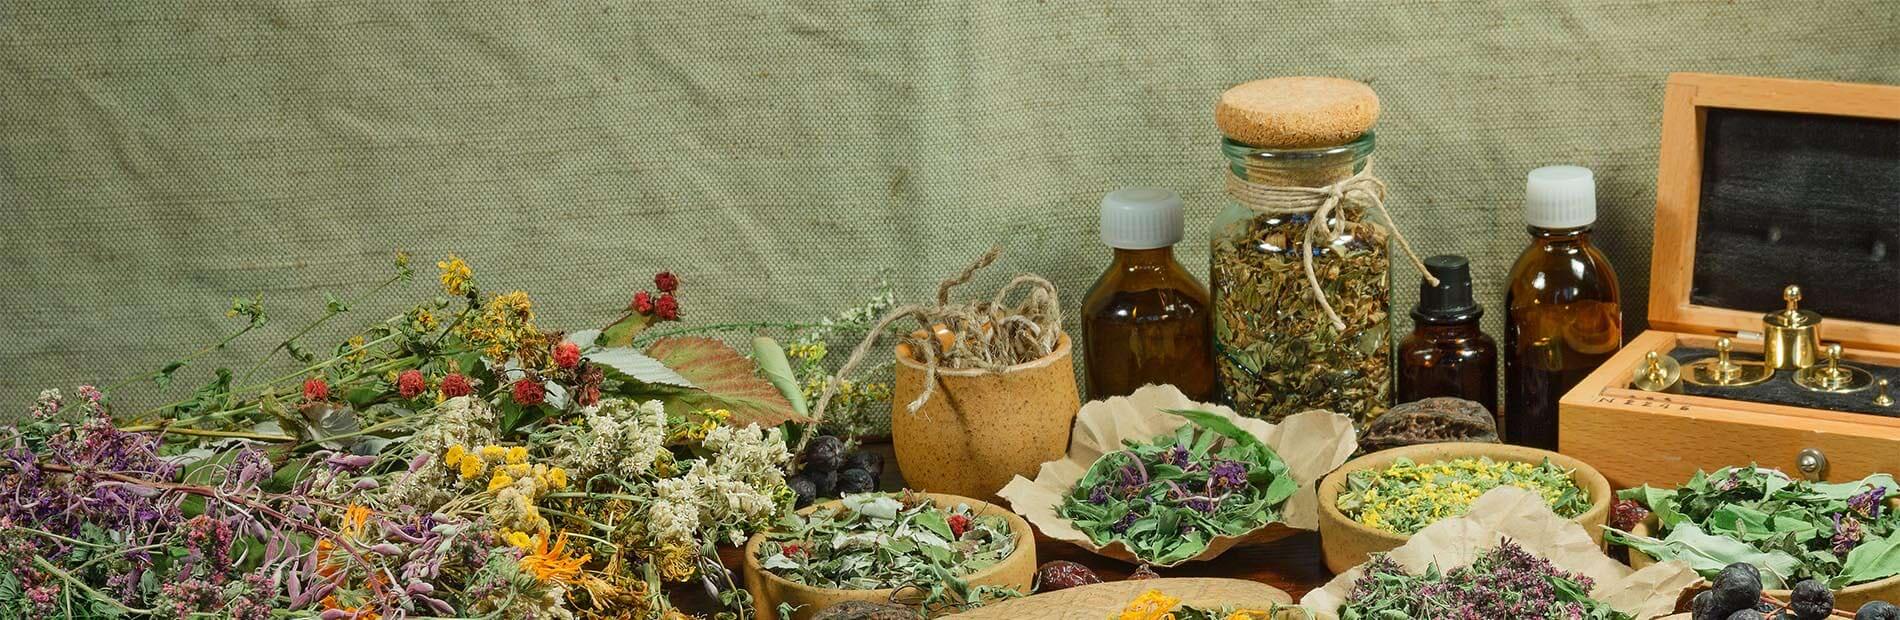 Natural herb store - buy bulk herbs - Alive Herbals